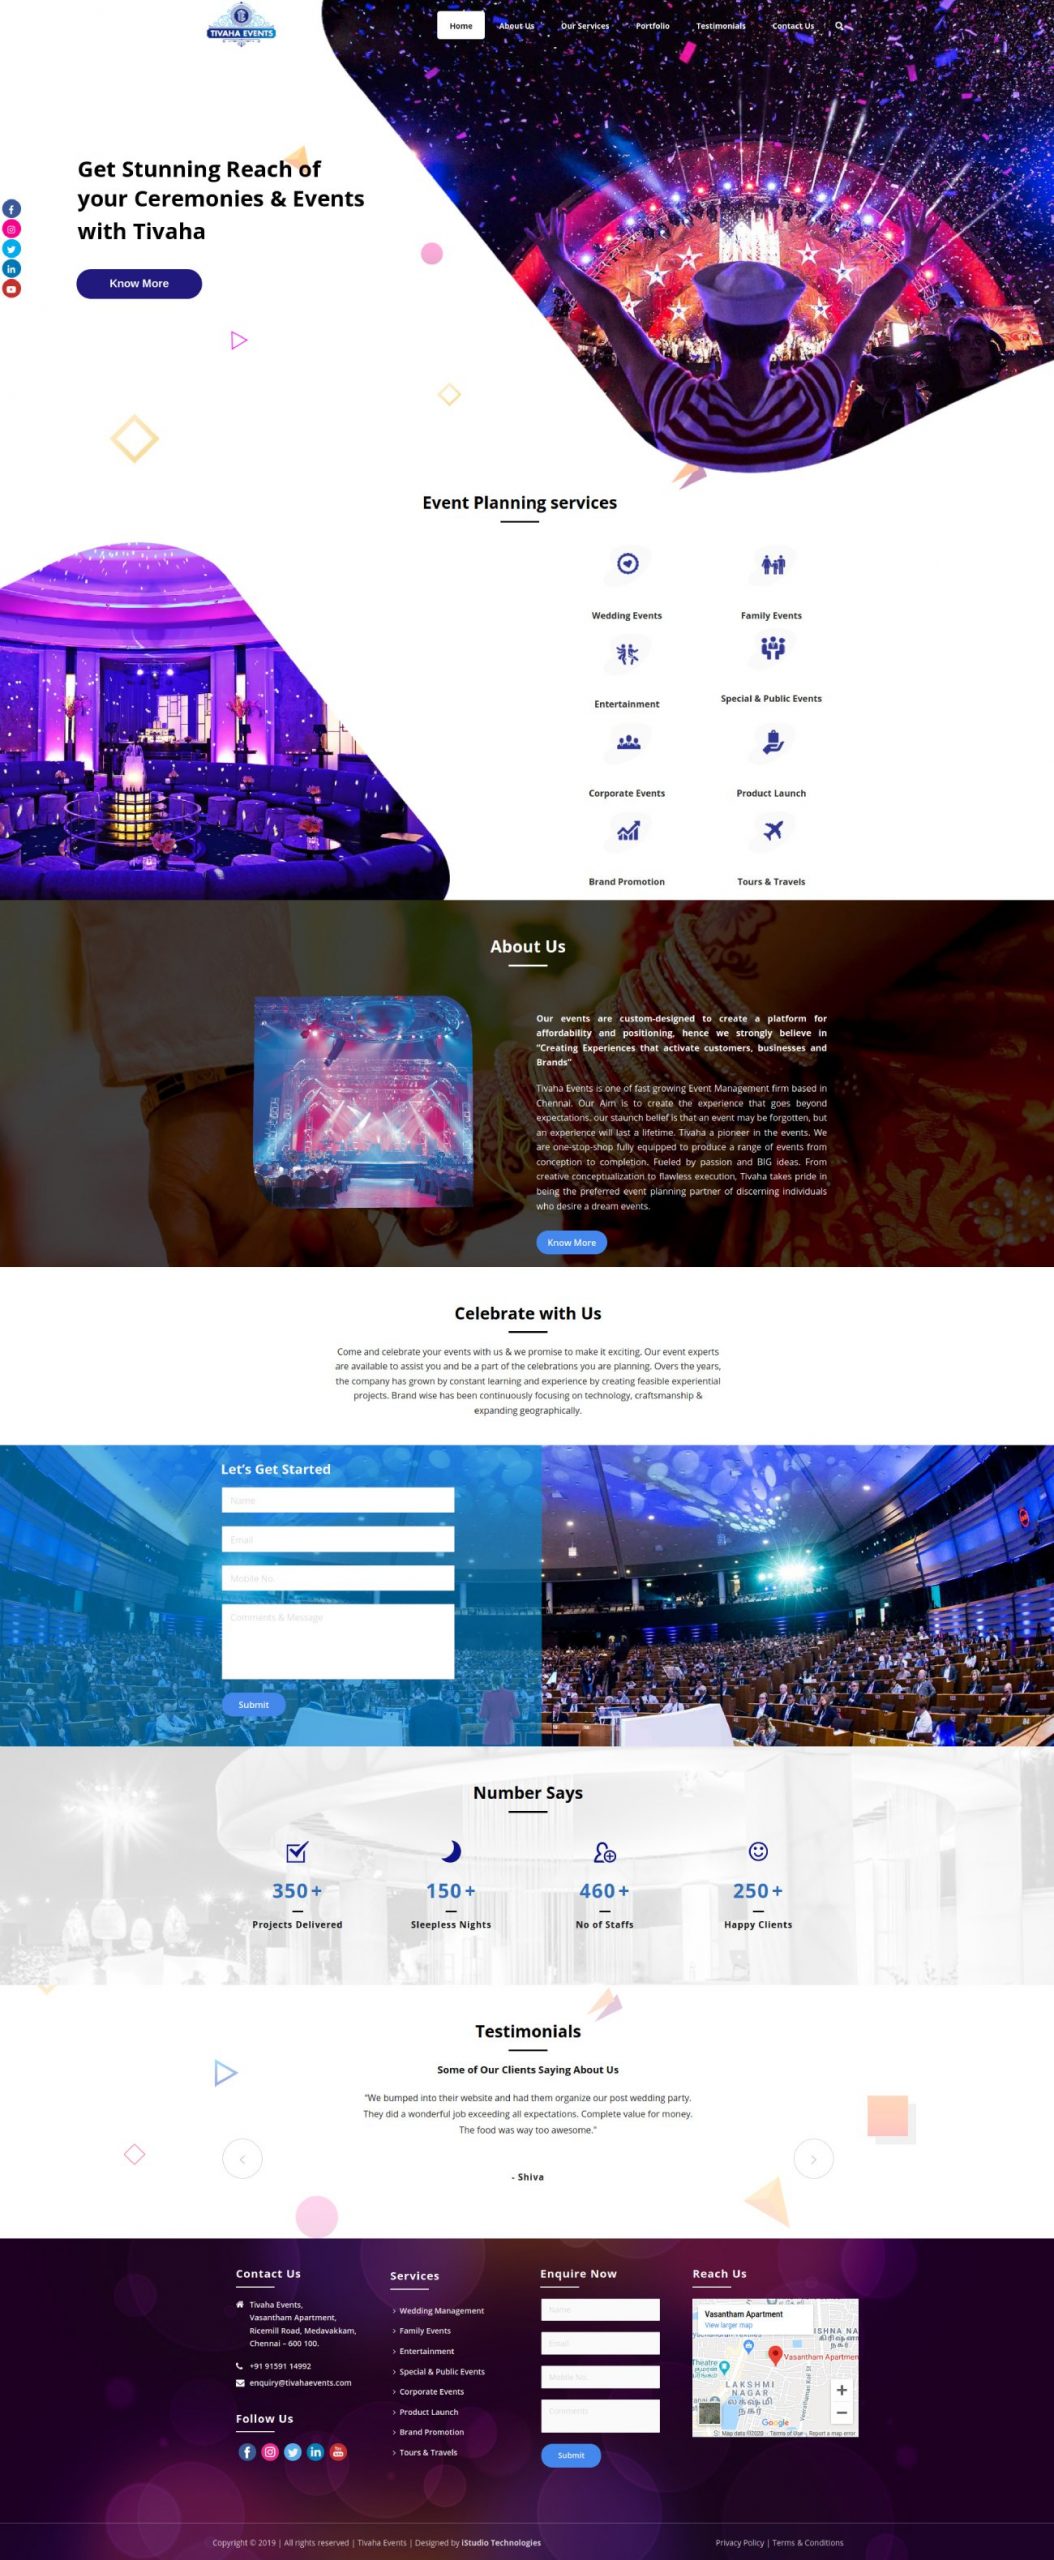 Tivaha Events -homepage - iStudio Technologies